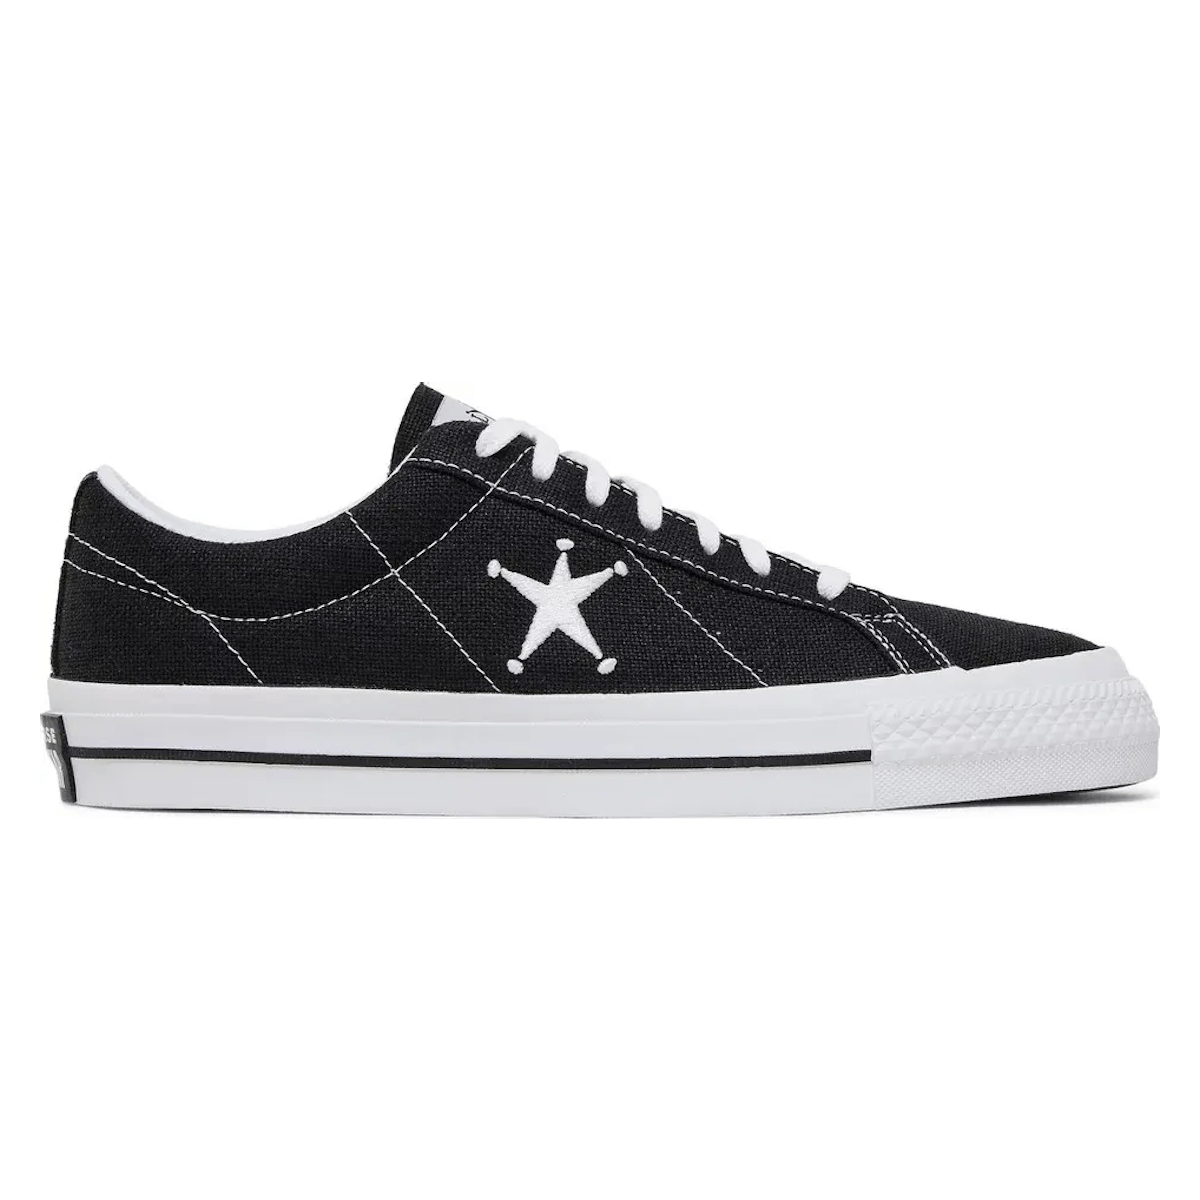 Stussy x Converse One Star Low "Black"